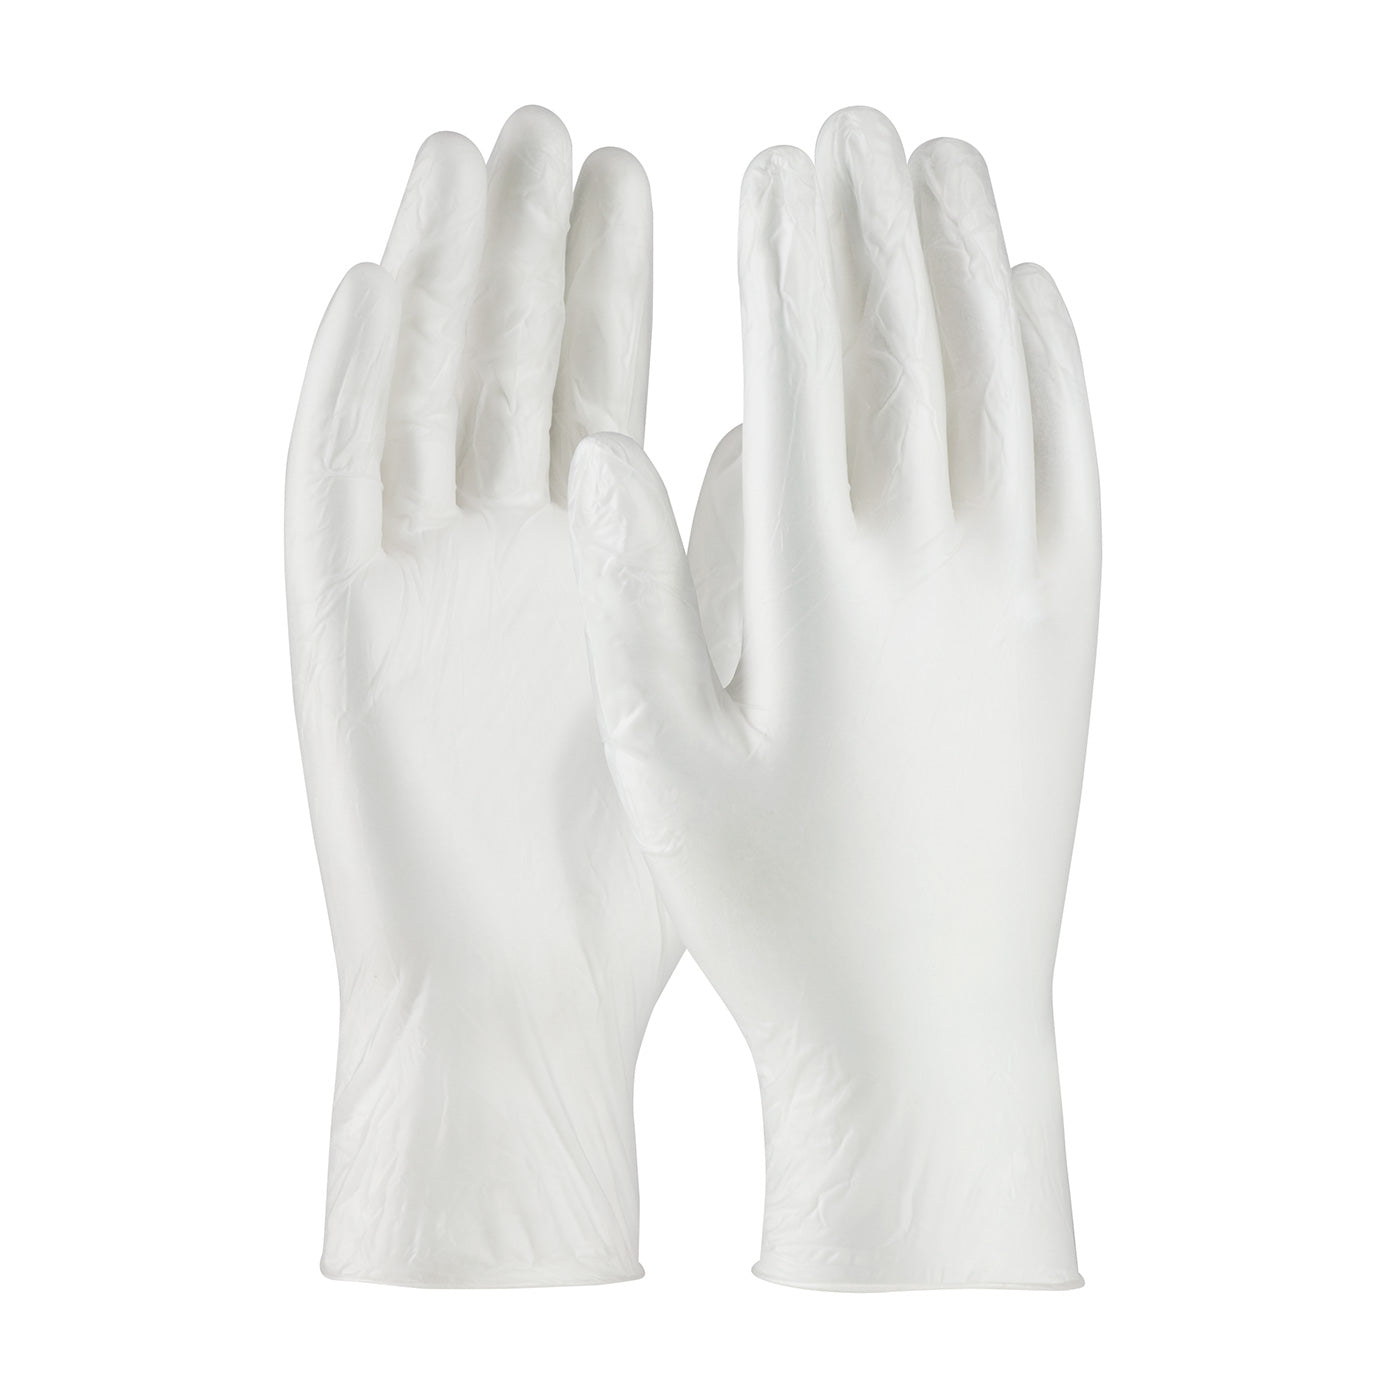 Ambi-dex 64-V3000/M Industrial Grade Disposable Vinyl Glove, Powdered - 3 Mil